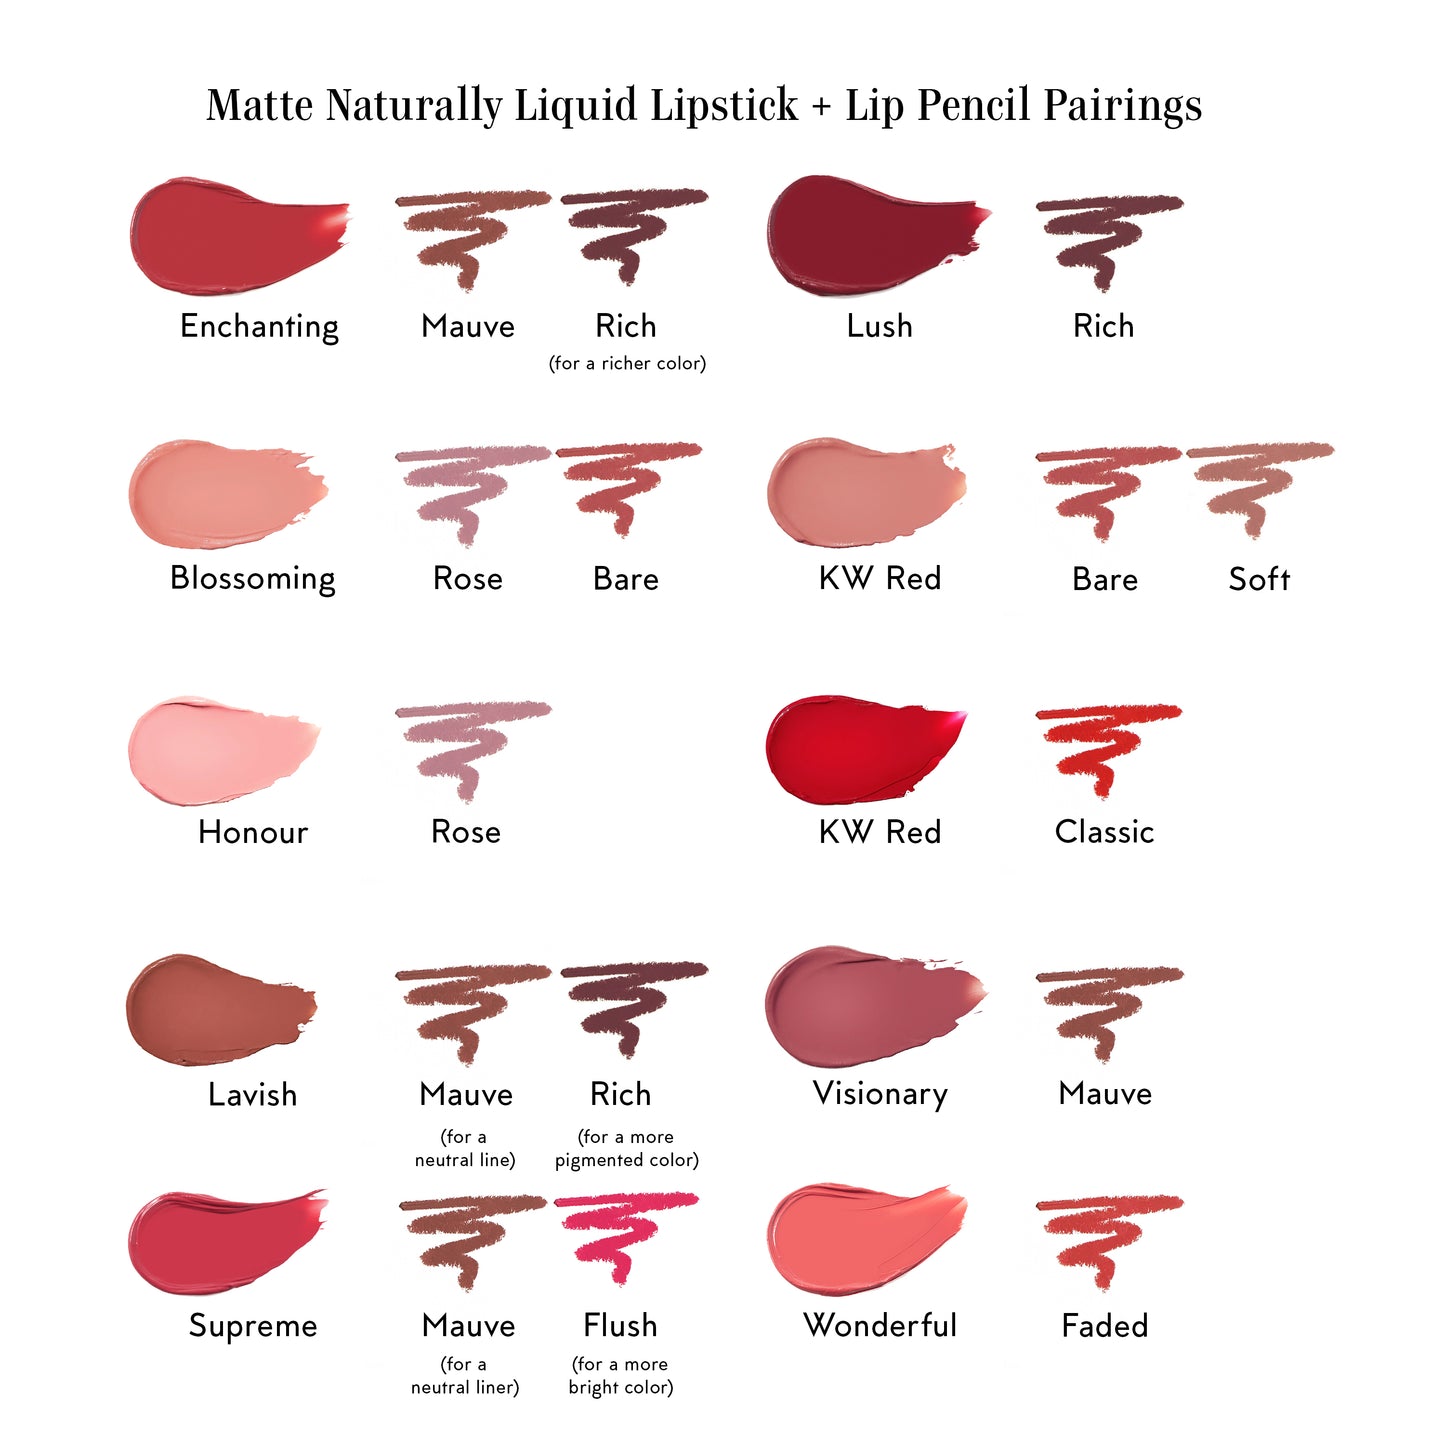 Matte, Naturally Liquid Lipstick--Blossoming